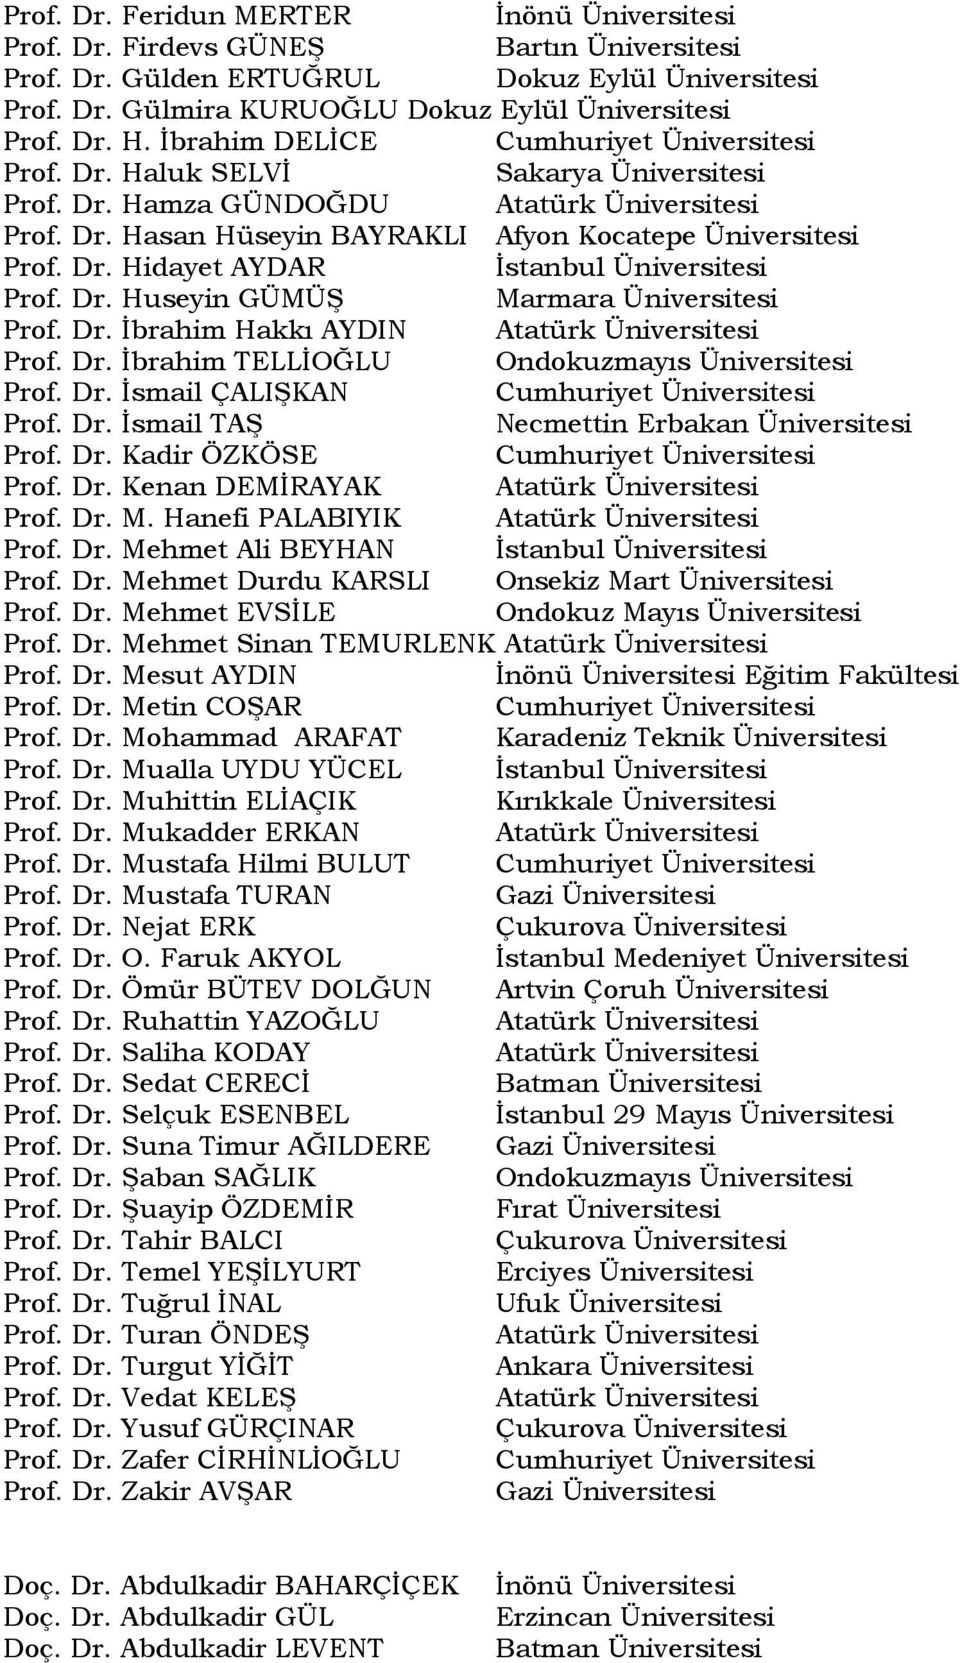 Dr. Ġsmail ÇALIġKAN Prof. Dr. Ġsmail TAġ Necmettin Erbakan Üniversitesi Prof. Dr. Kadir ÖZKÖSE Prof. Dr. Kenan DEMĠRAYAK Prof. Dr. M. Hanefi PALABIYIK Prof. Dr. Mehmet Ali BEYHAN Ġstanbul Üniversitesi Prof.